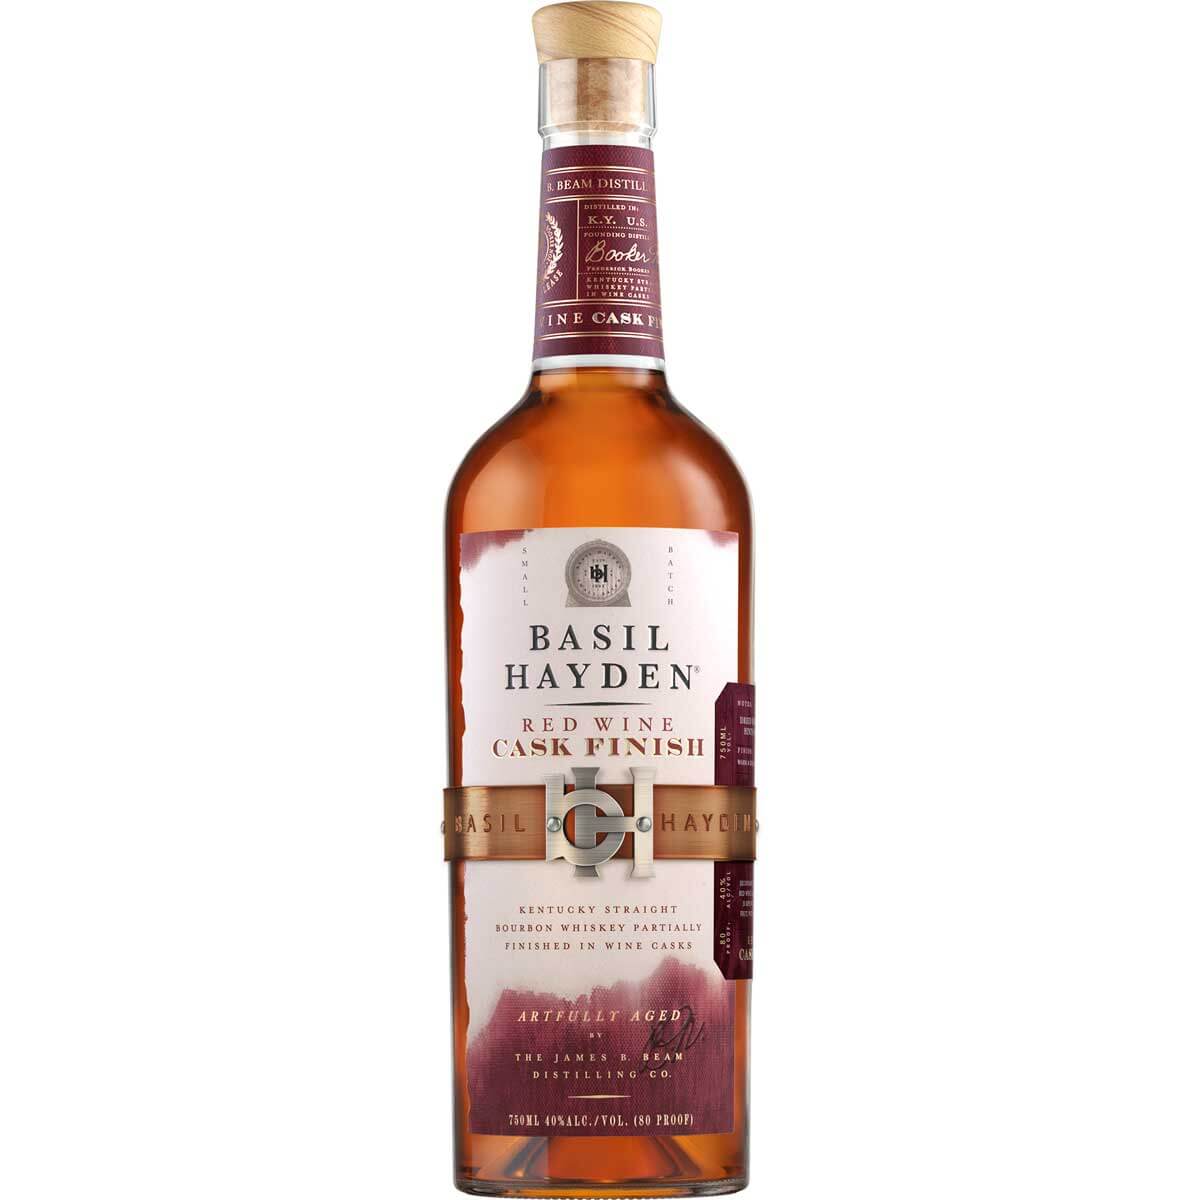 Basil Hayden Red Wine Cask Finish Bourbon bottle